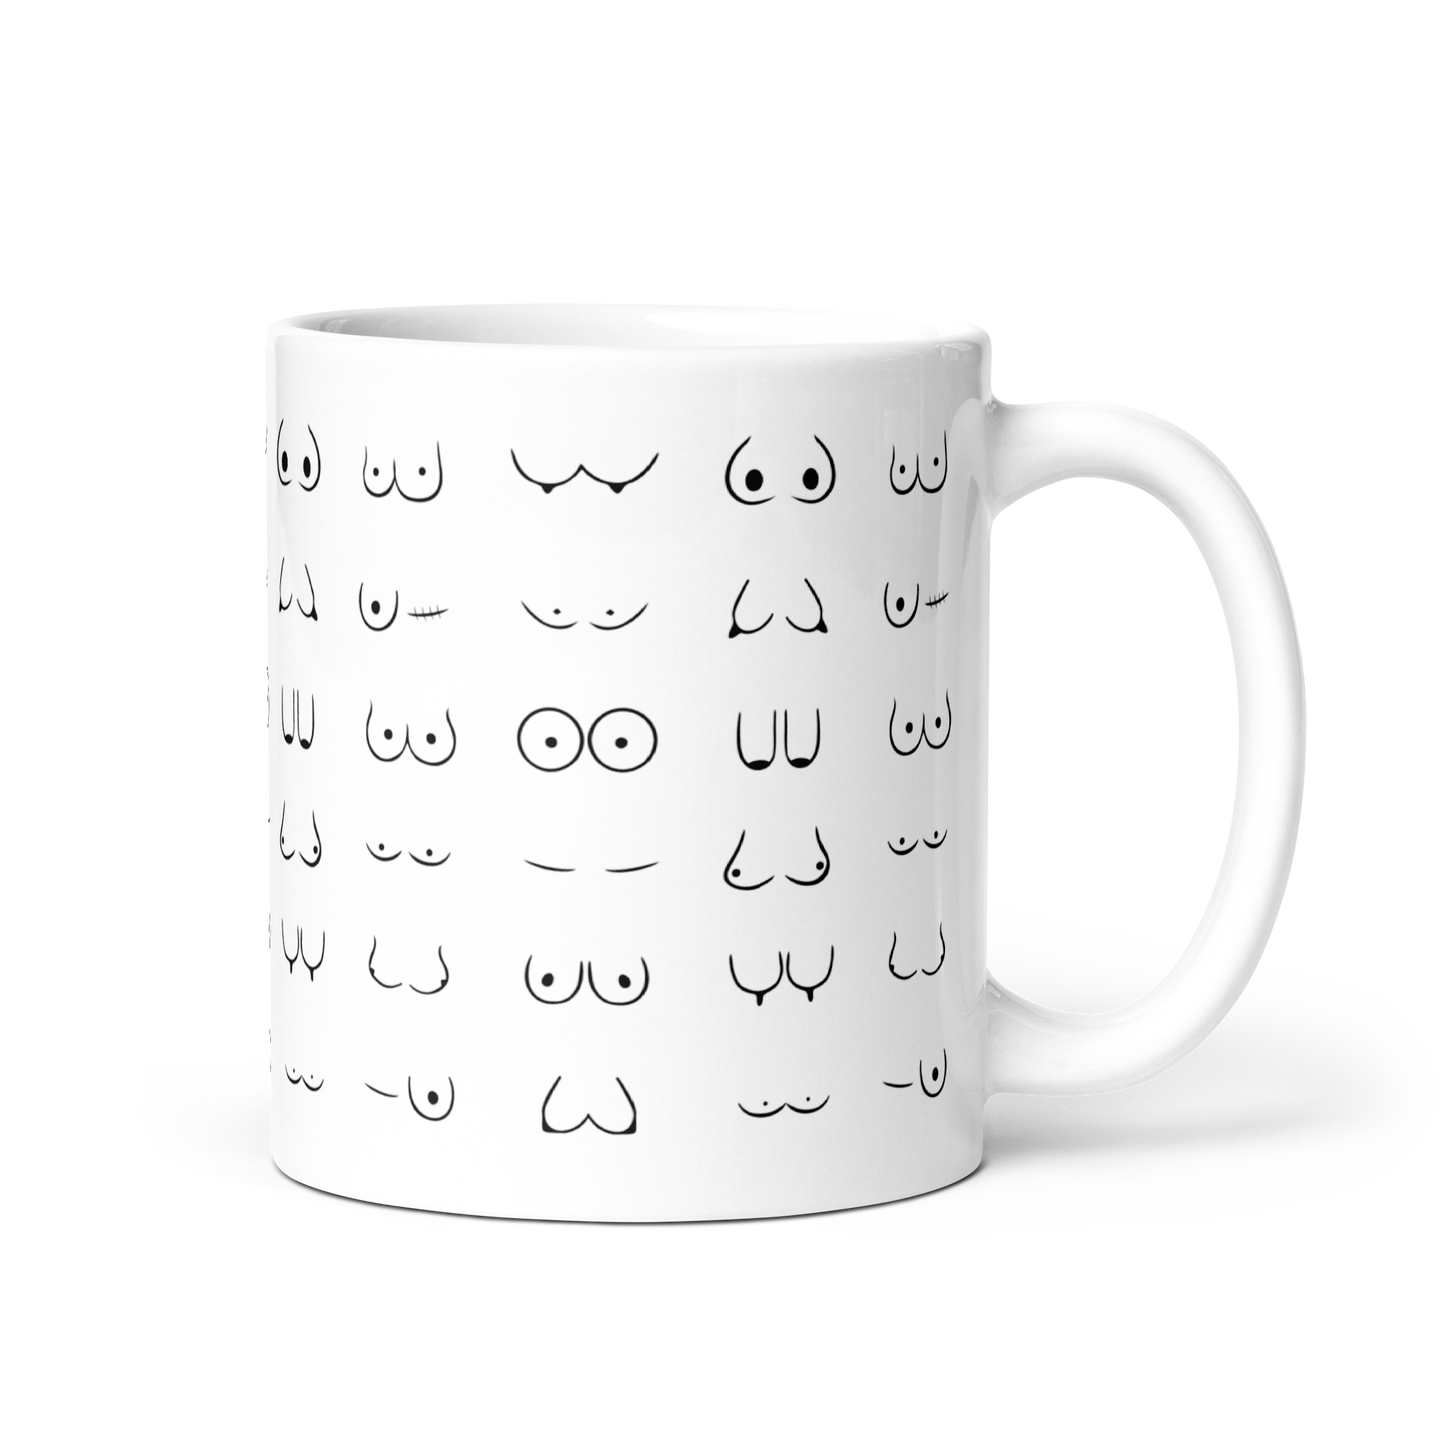 Boobies Mug